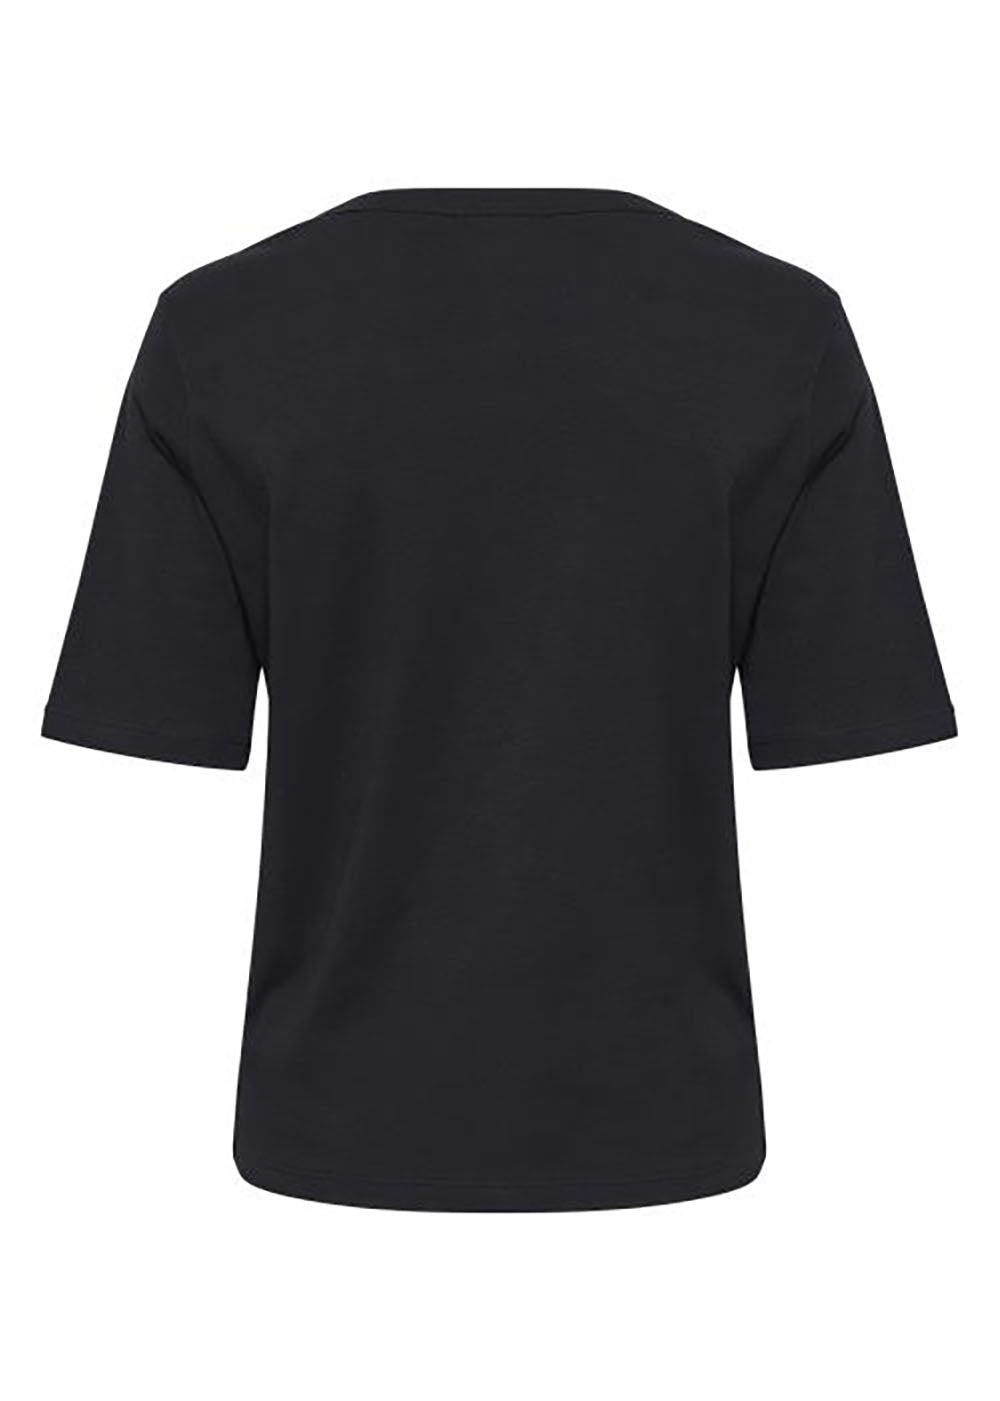 Ratana T-Shirt - Black - Part Two Canada - Danali - 64903 - 30307808